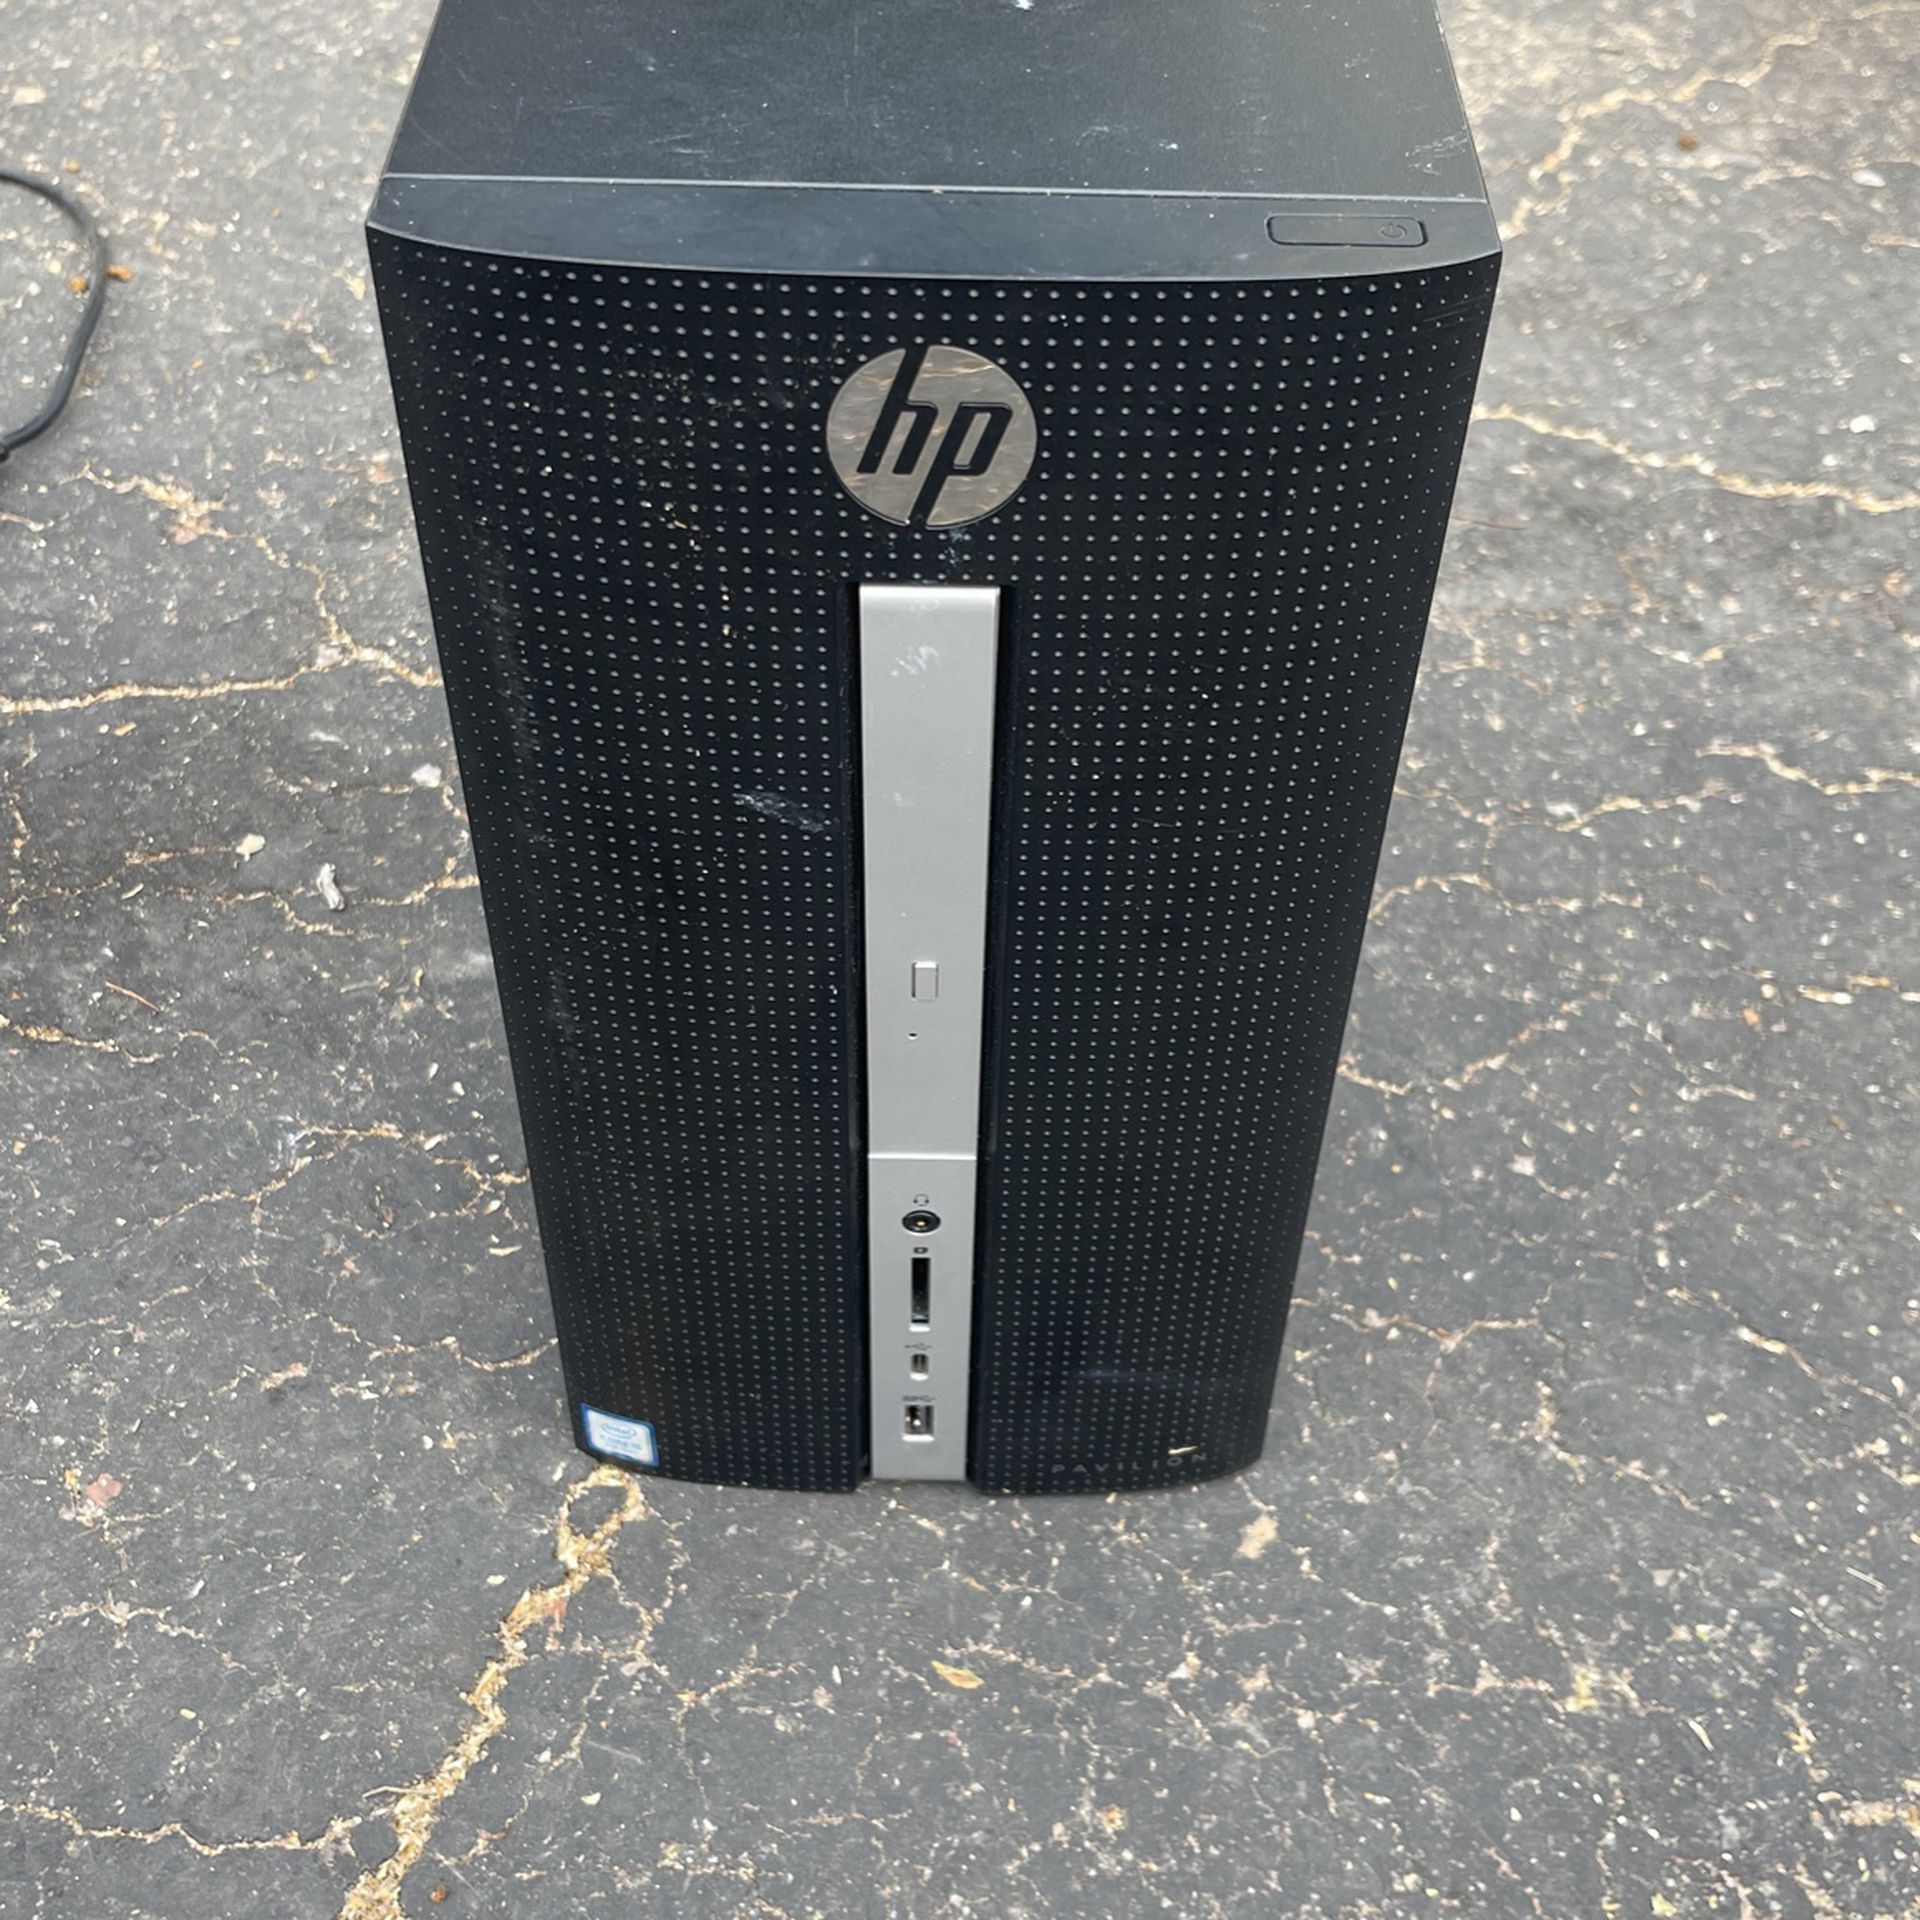 HP Pavillion Desktop- (570- p026) Cords Included